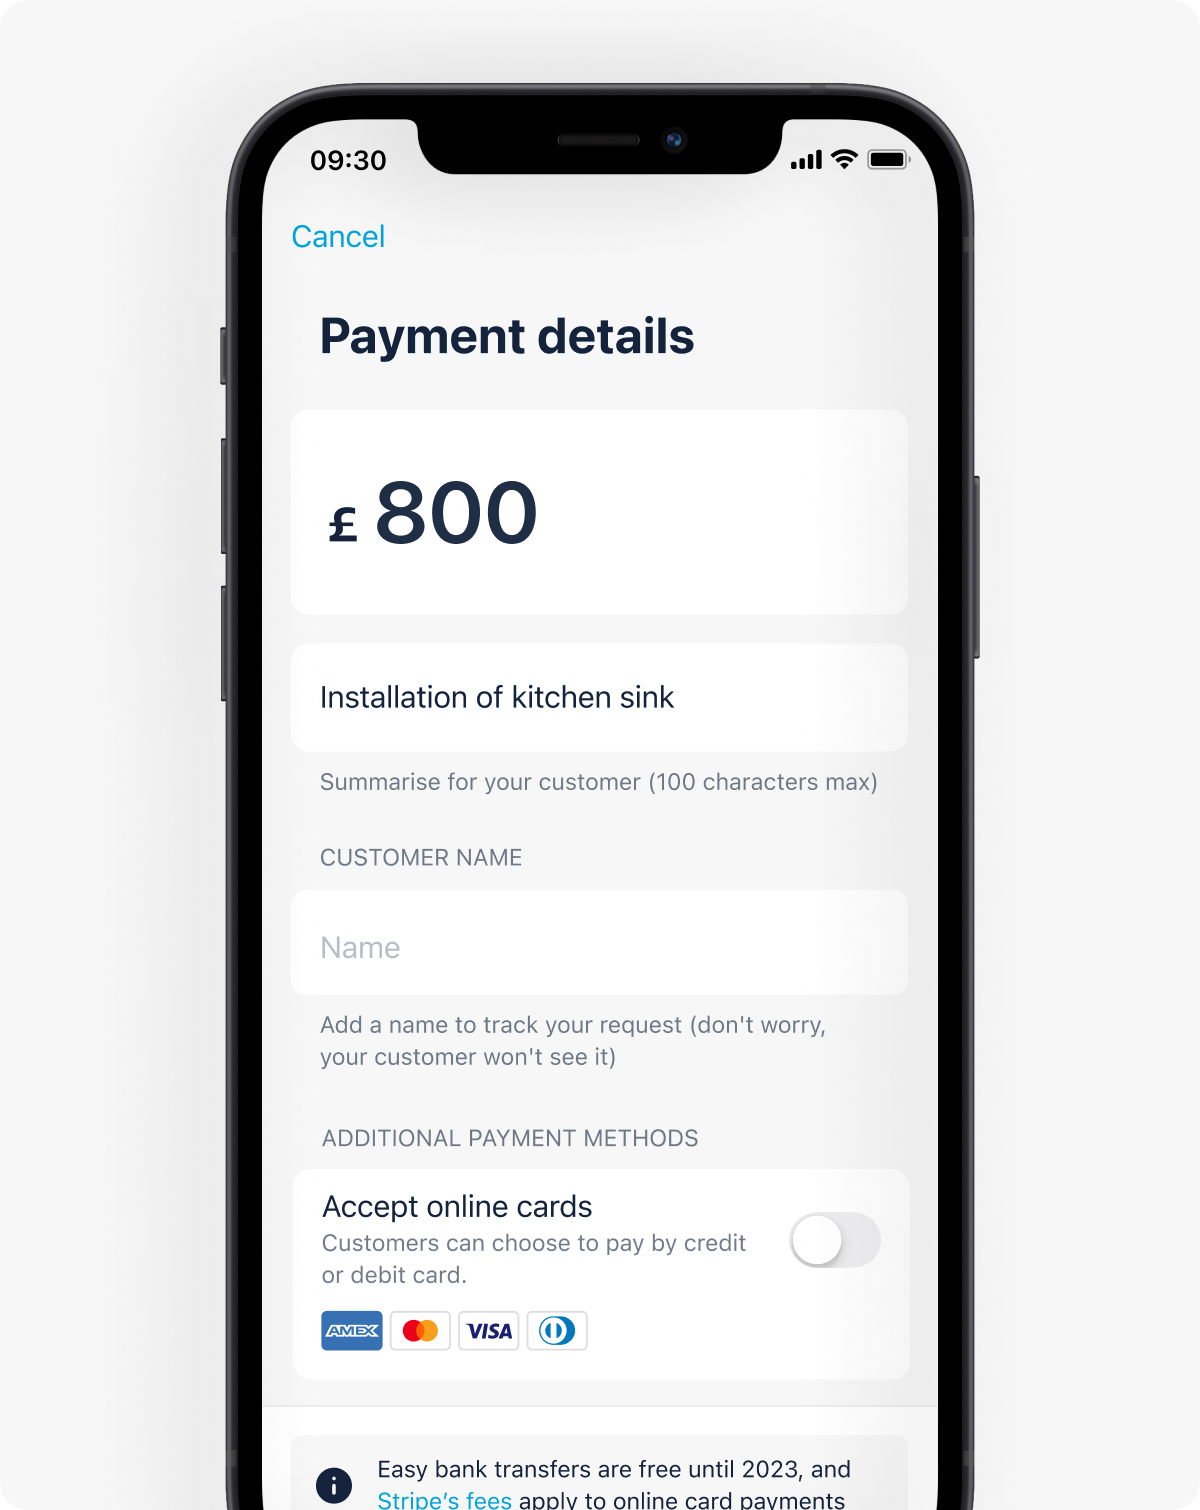 Track a payment link  Stripe Documentation